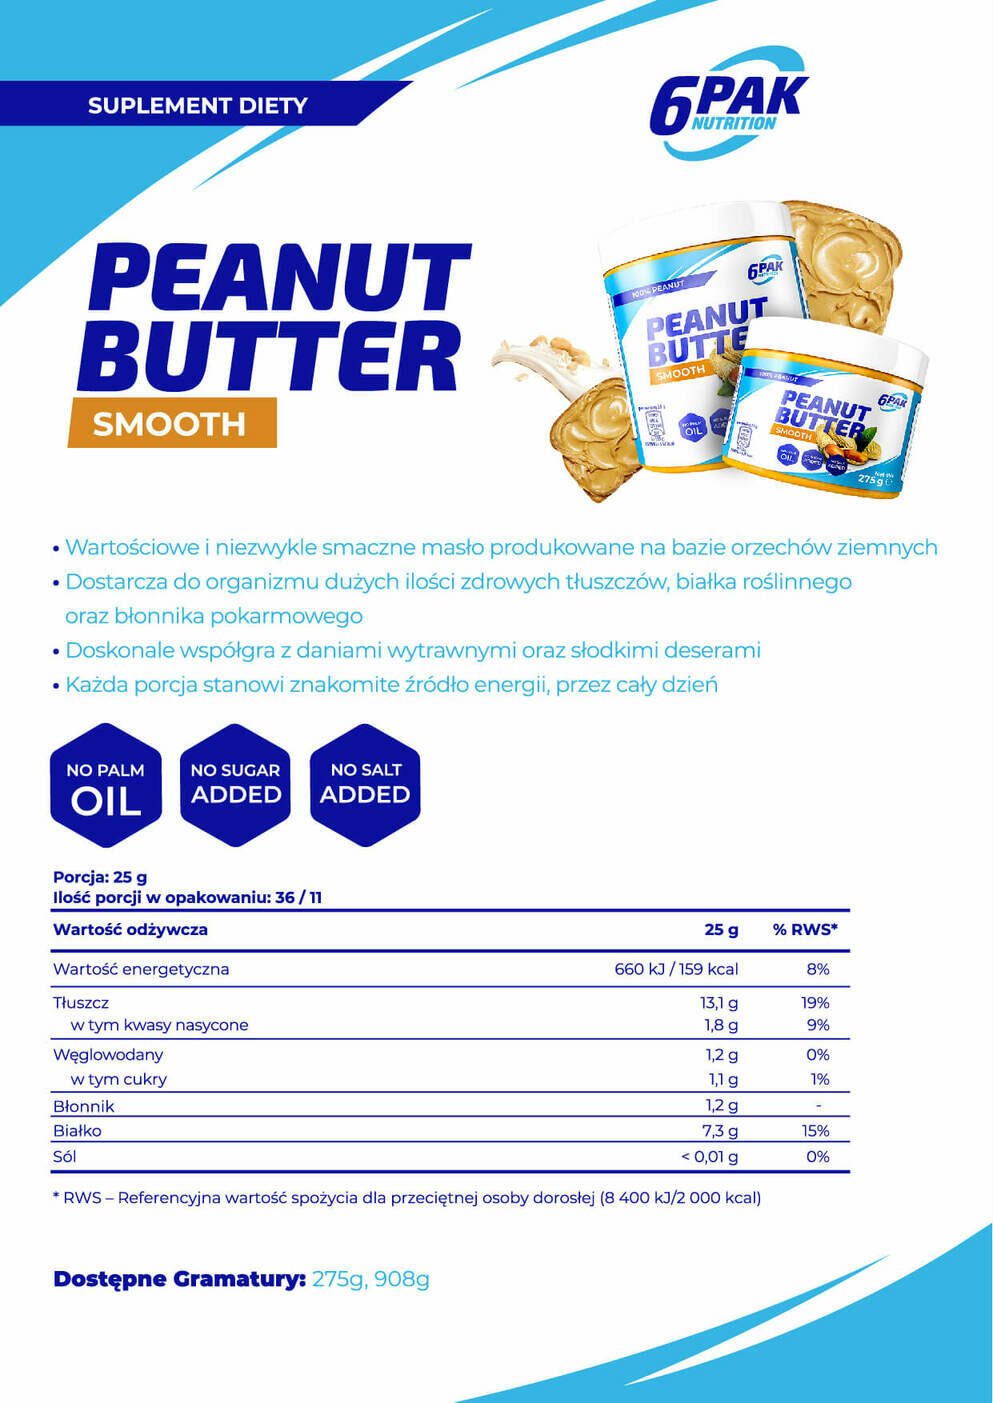 6PAK Nutrition Peanut Butter Smooth - 275g